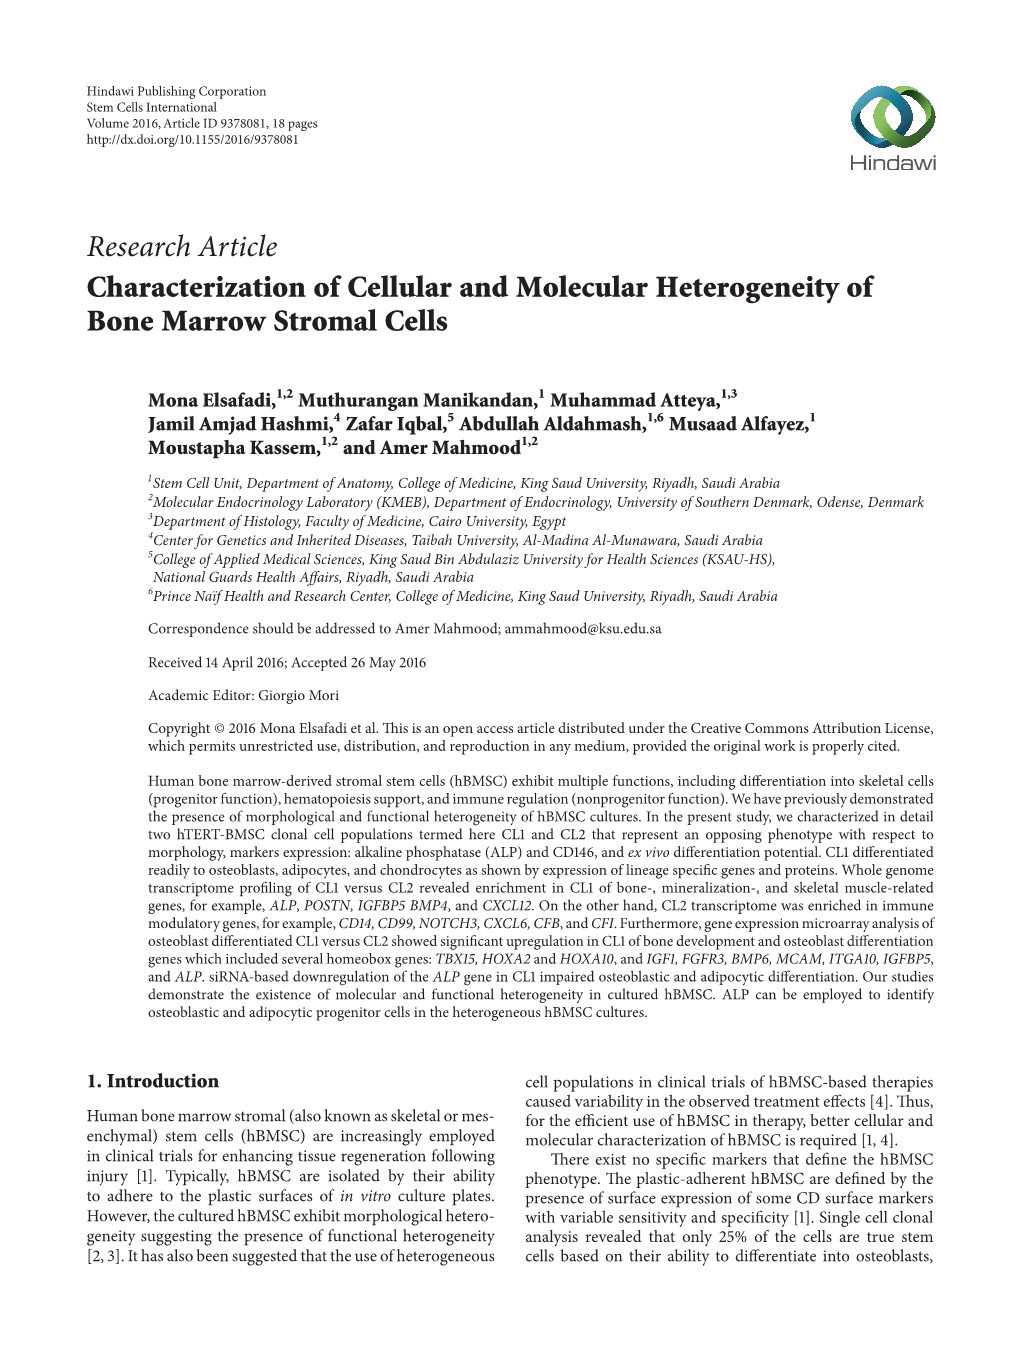 Characterization of Cellular and Molecular Heterogeneity of Bone Marrow Stromal Cells